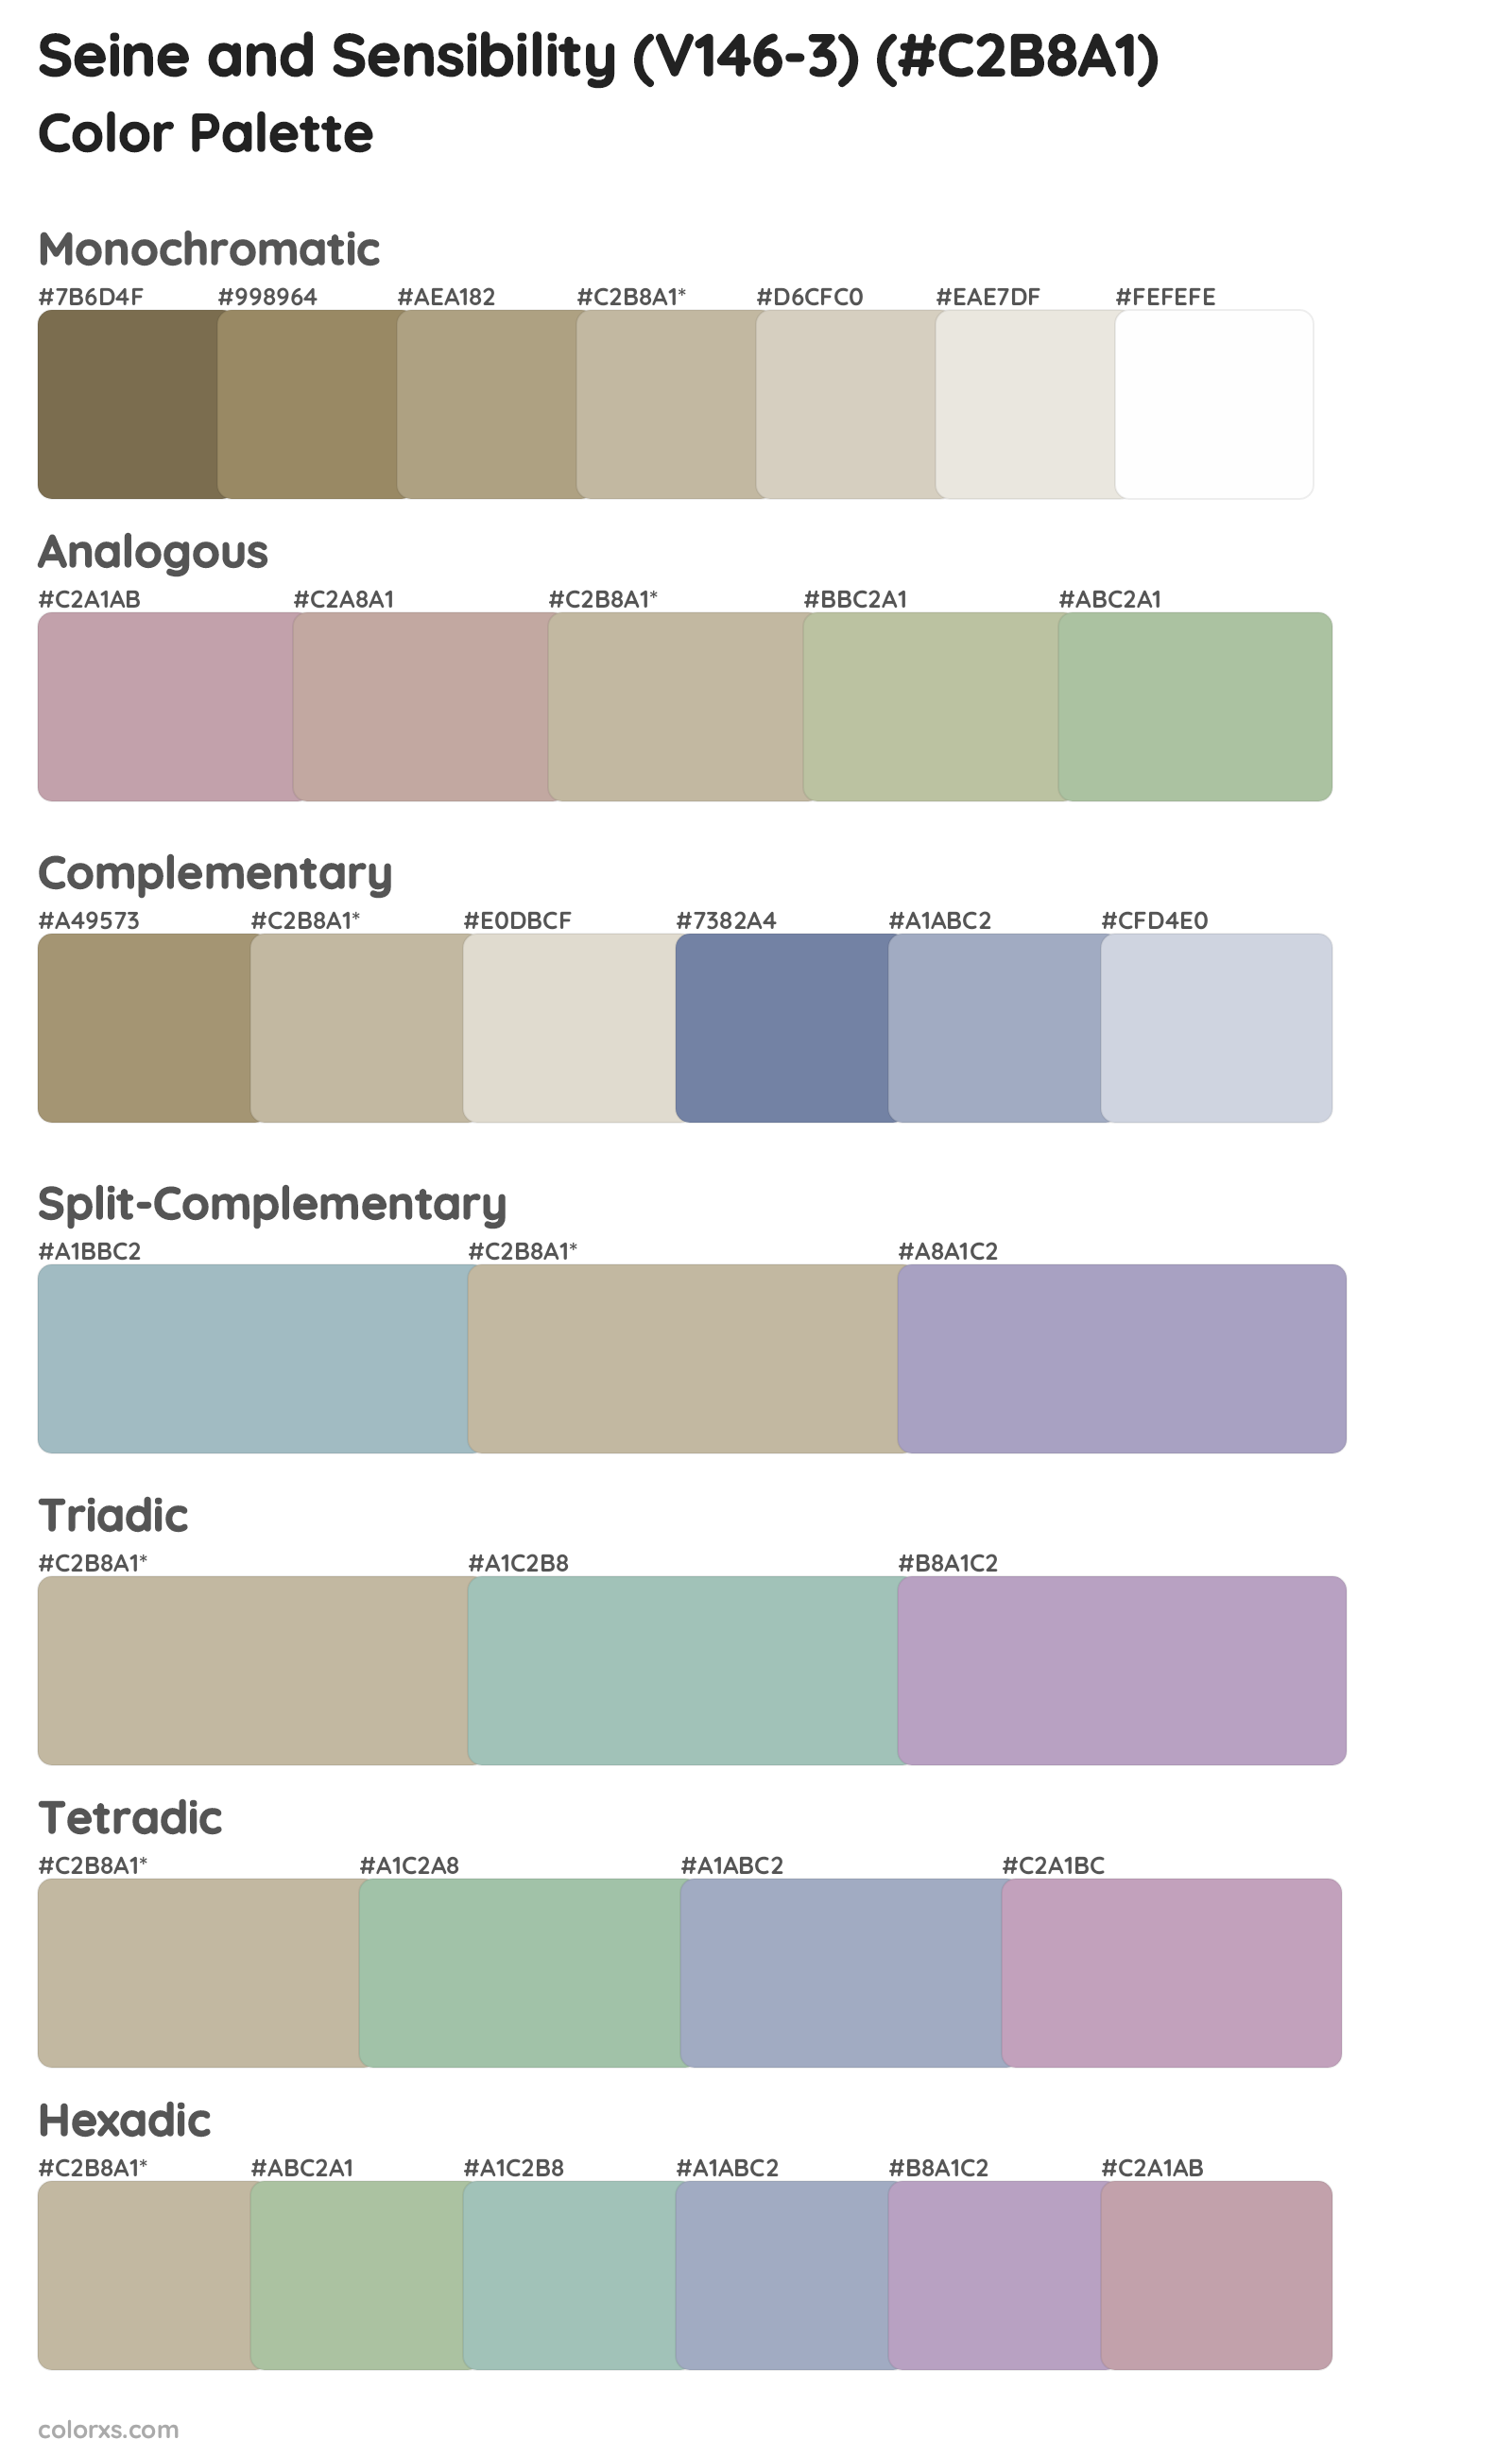 Seine and Sensibility (V146-3) Color Scheme Palettes